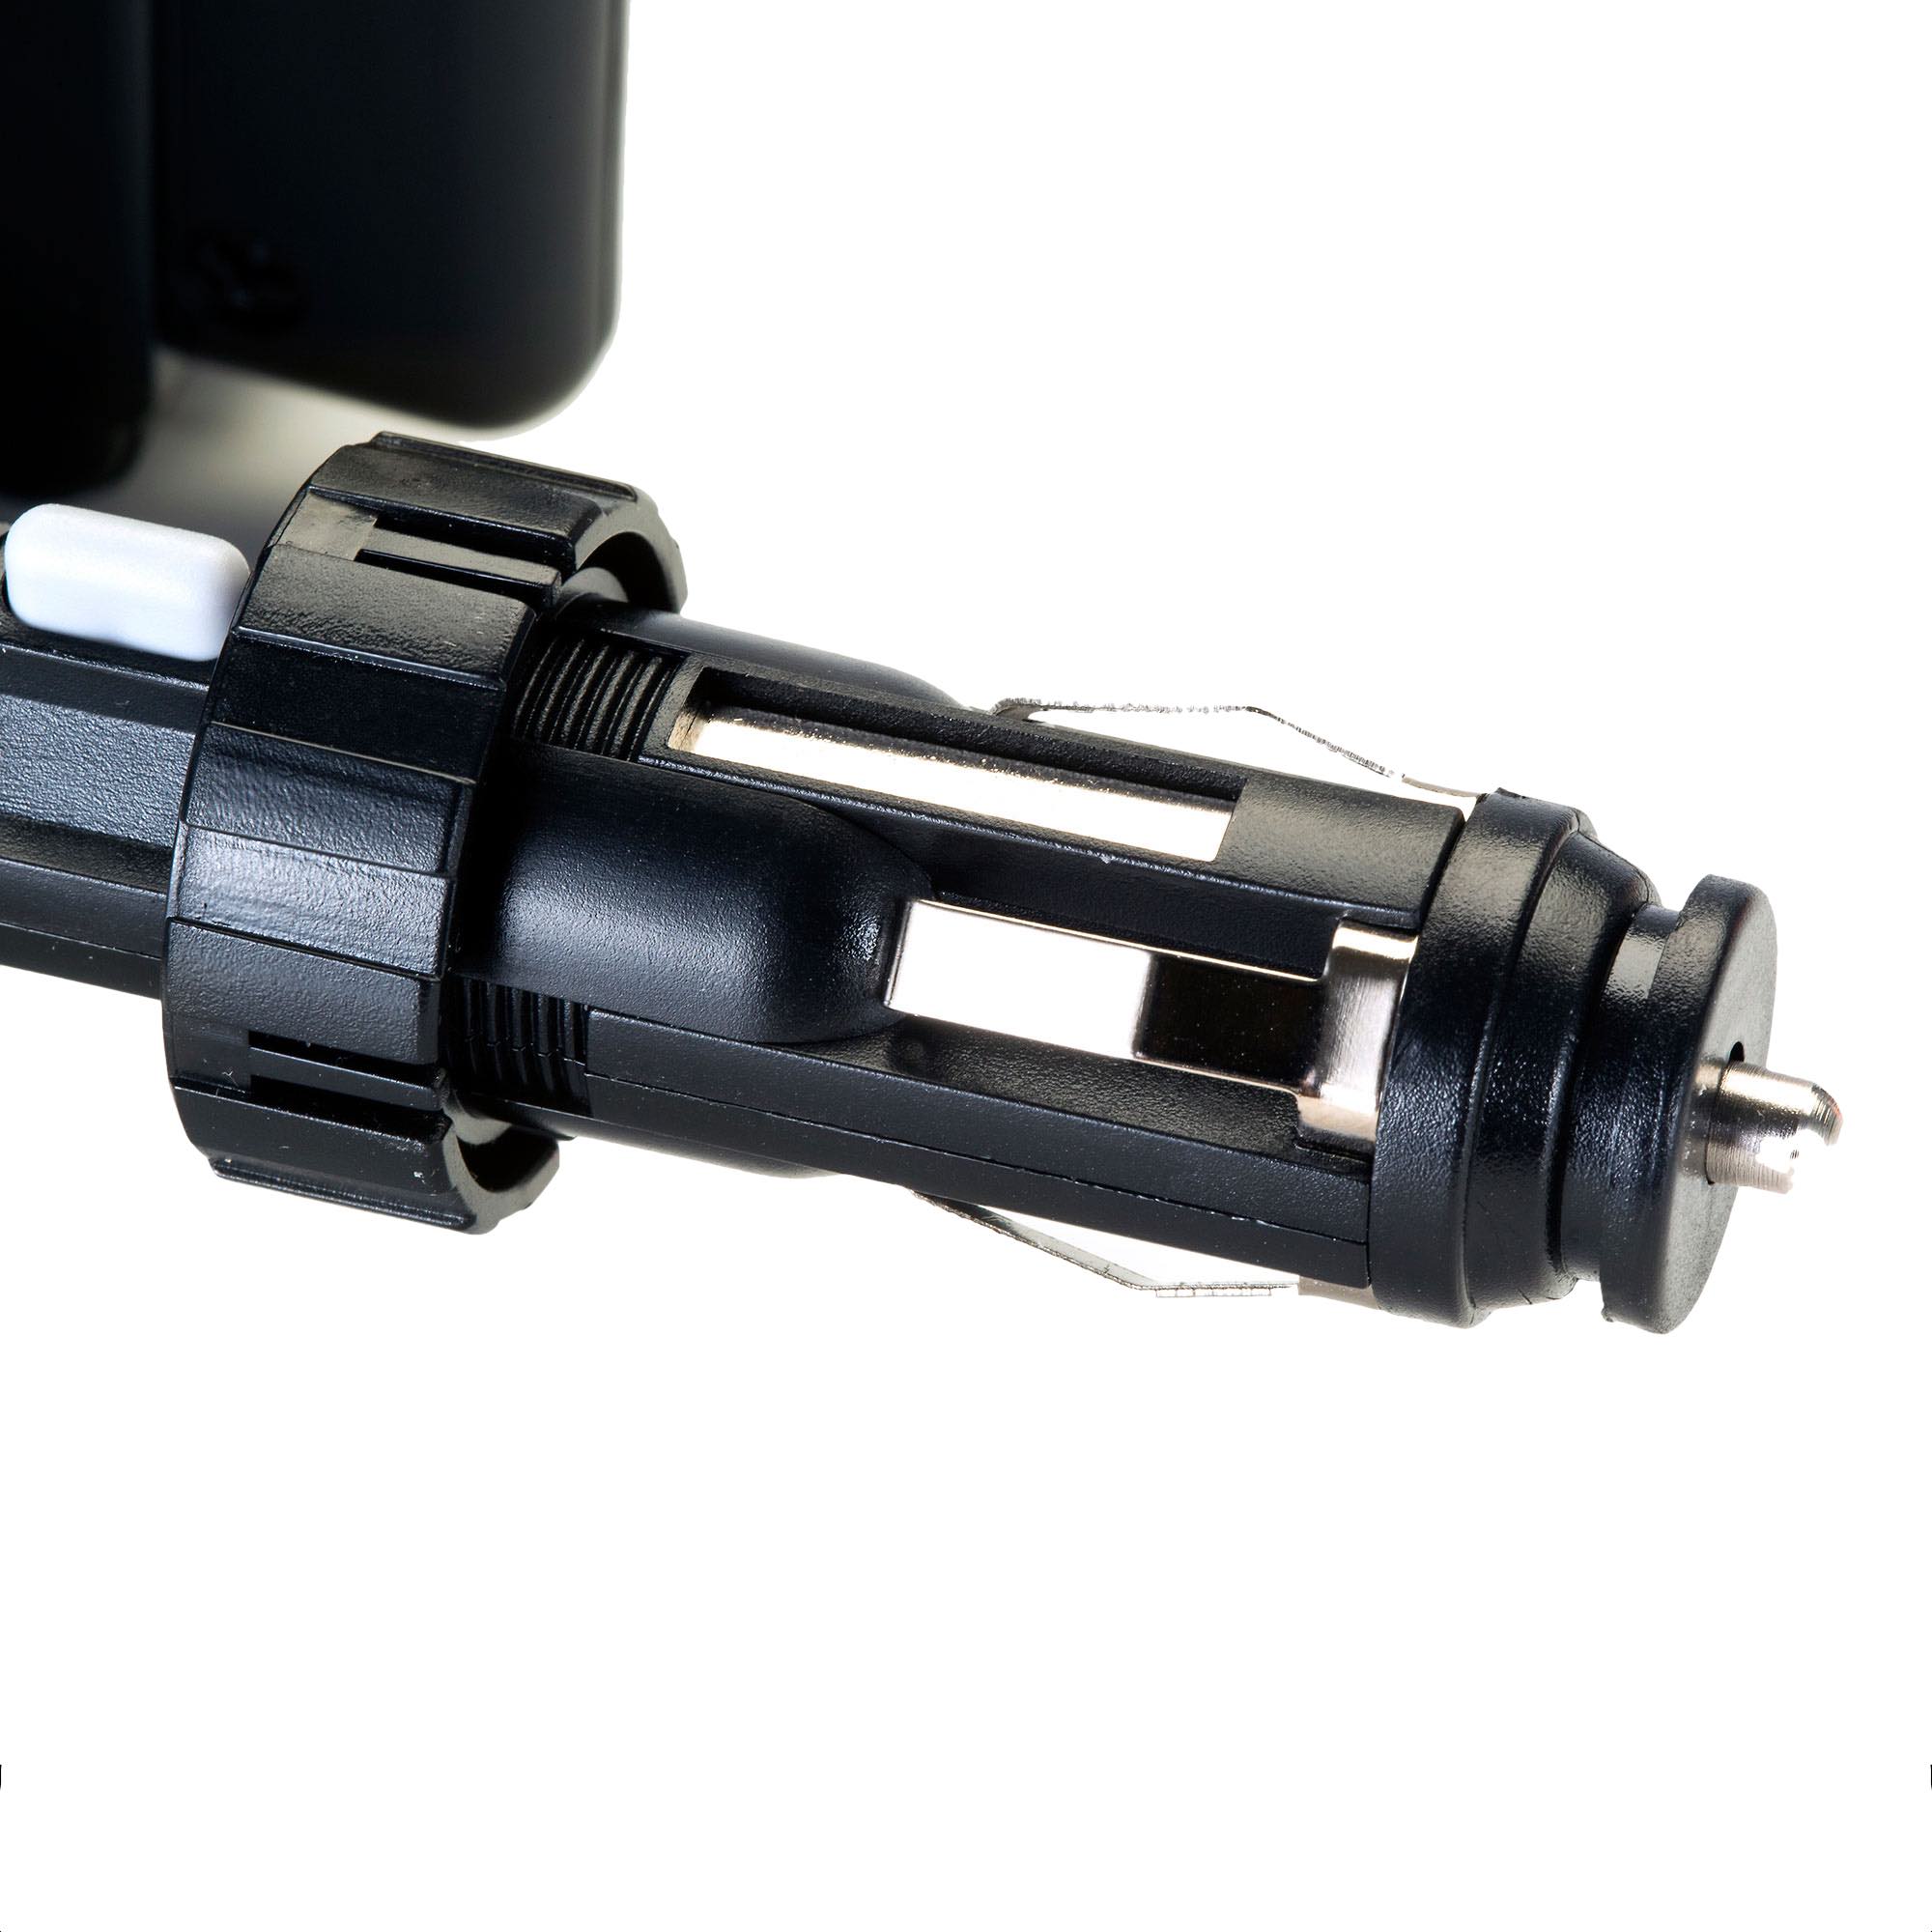 Dual USB / 12V Charger Car Cigarette Lighter Mount and Holder for the Garmin Nuvi 860